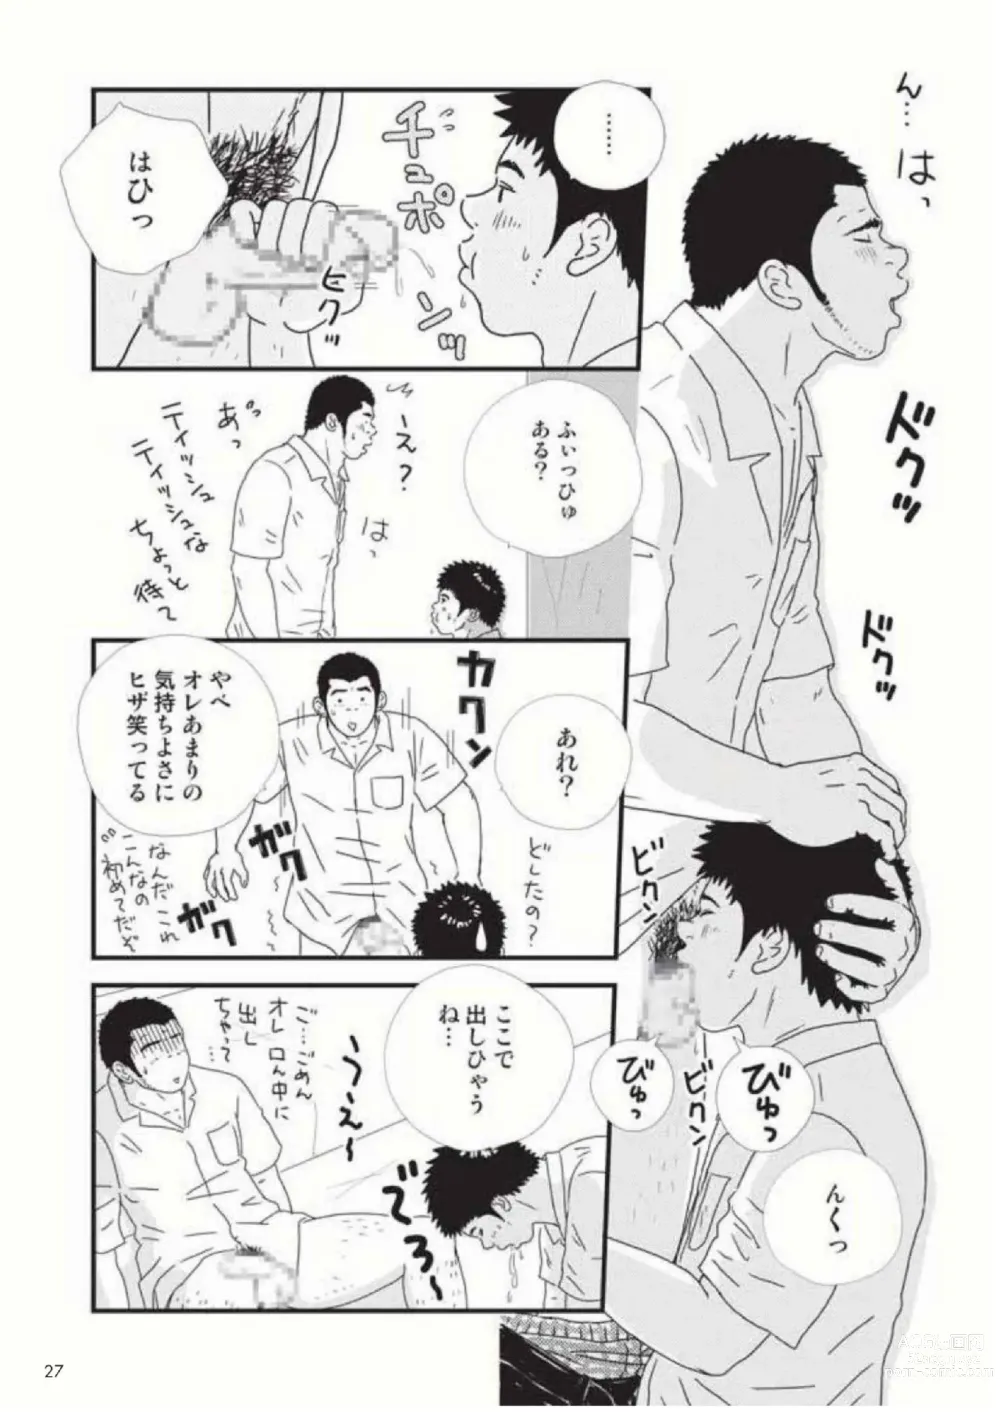 Page 9 of manga SUCK!